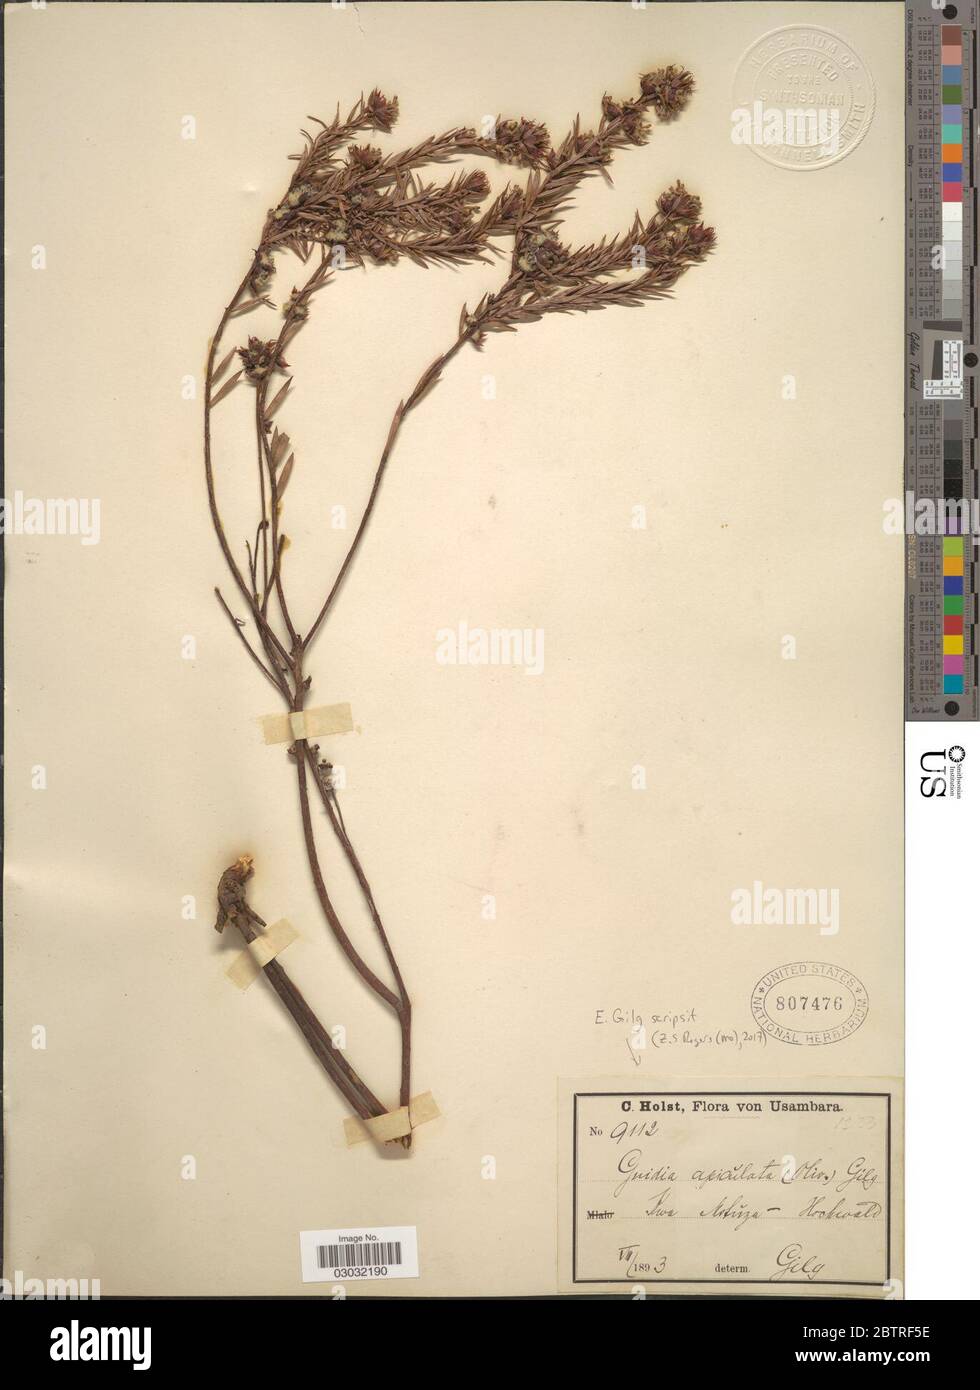 Gnidia apiculata Oliv Gilg. Stock Photo